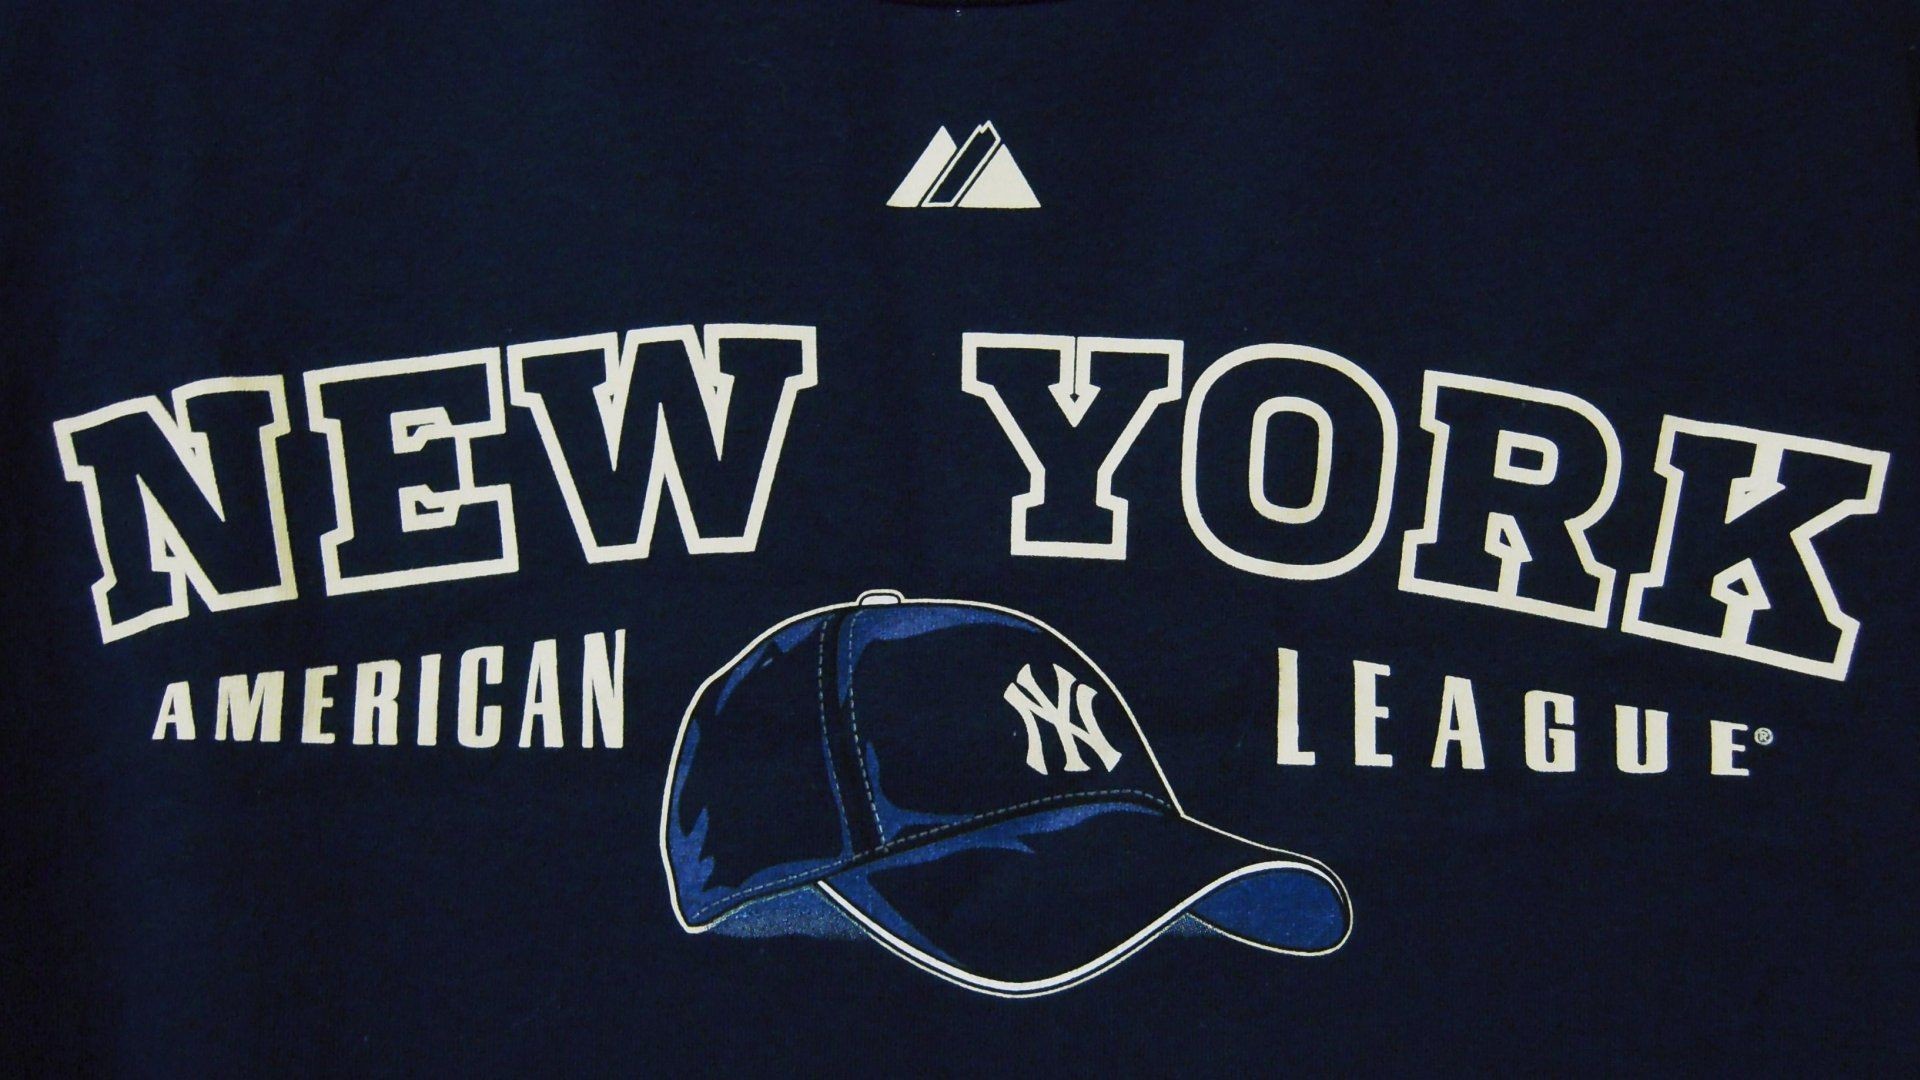 1920x1080 ... New York Yankees Backgrounds Wallpapercraft. Download